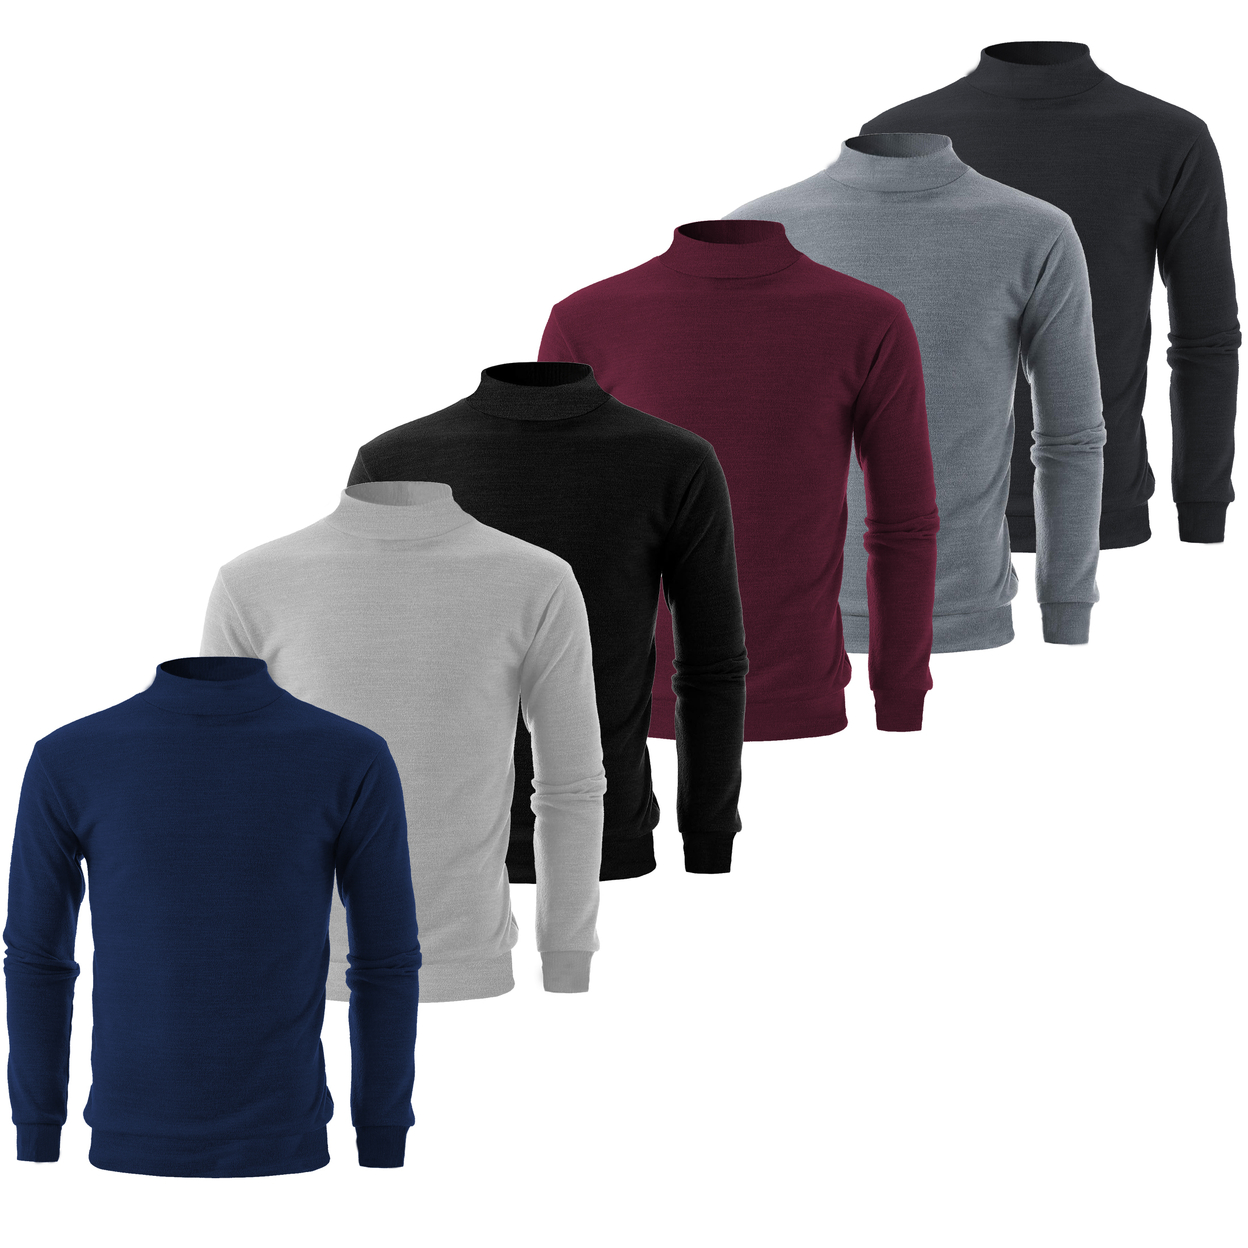 Multi-Pack: Men's Winter Warm Cozy Knit Slim Fit Mock Neck Sweater - 2-pack, Medium